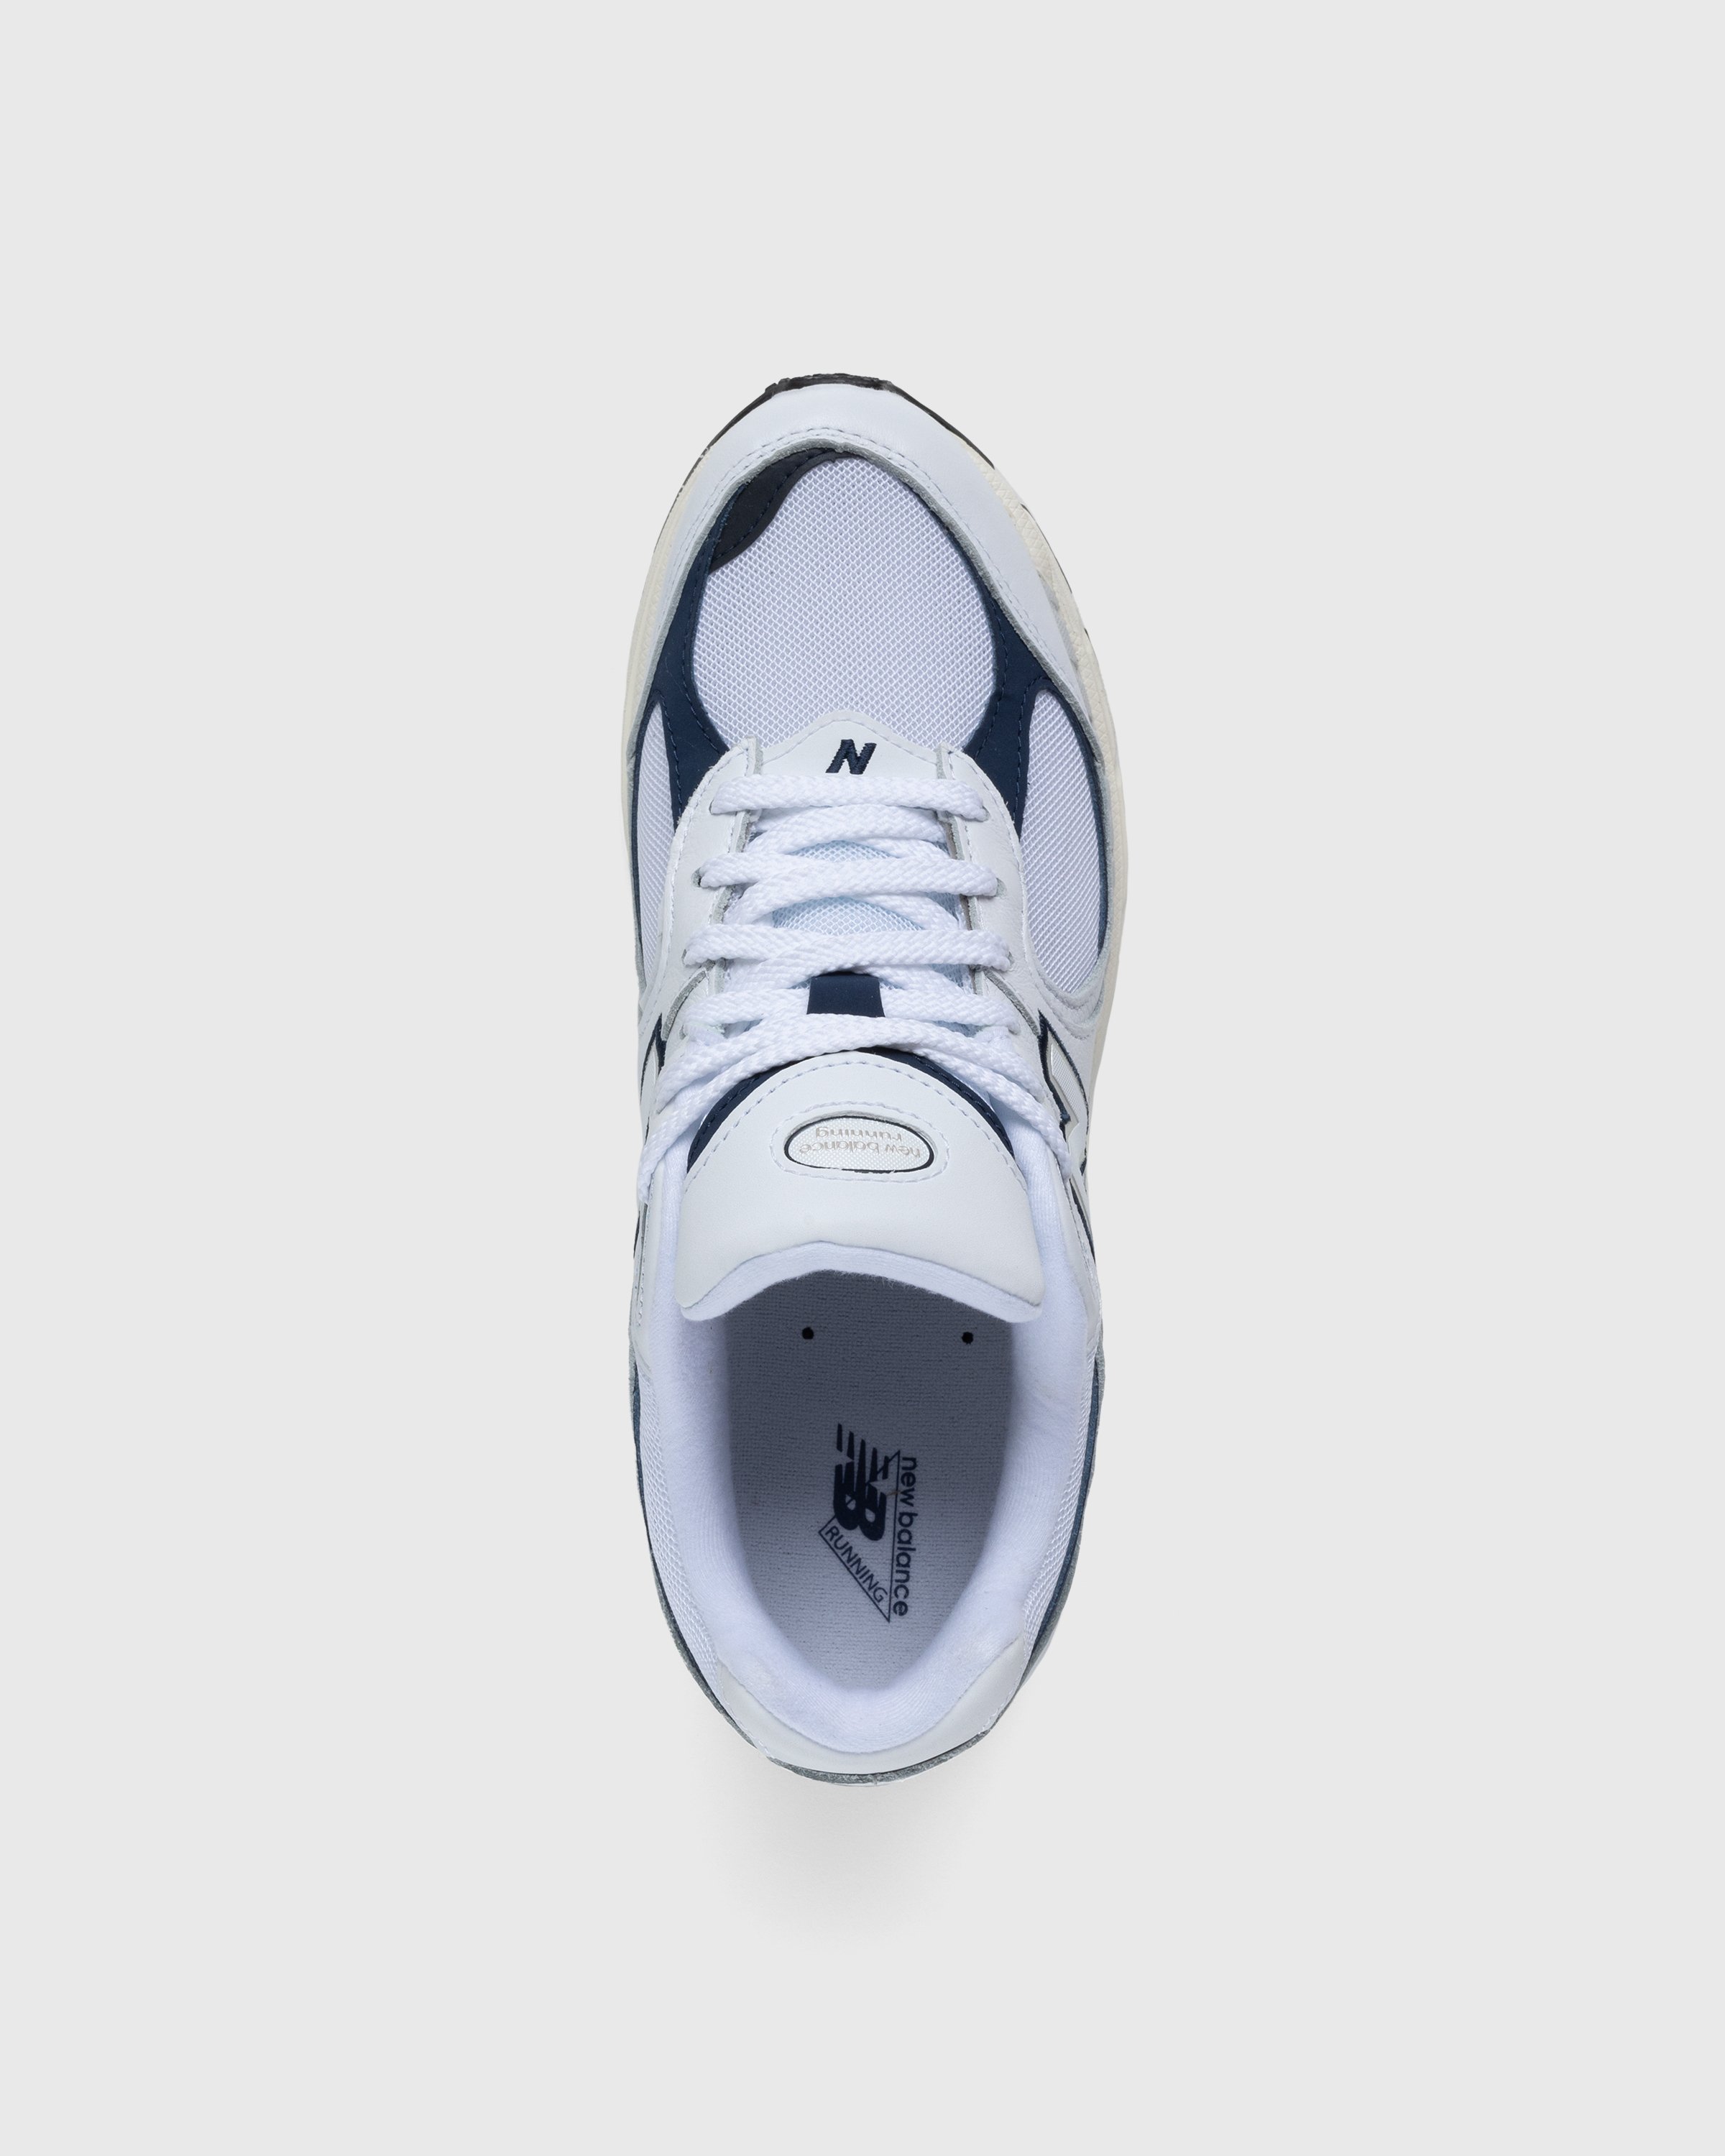 New Balance - M2002RHQ White - Footwear - White - Image 5